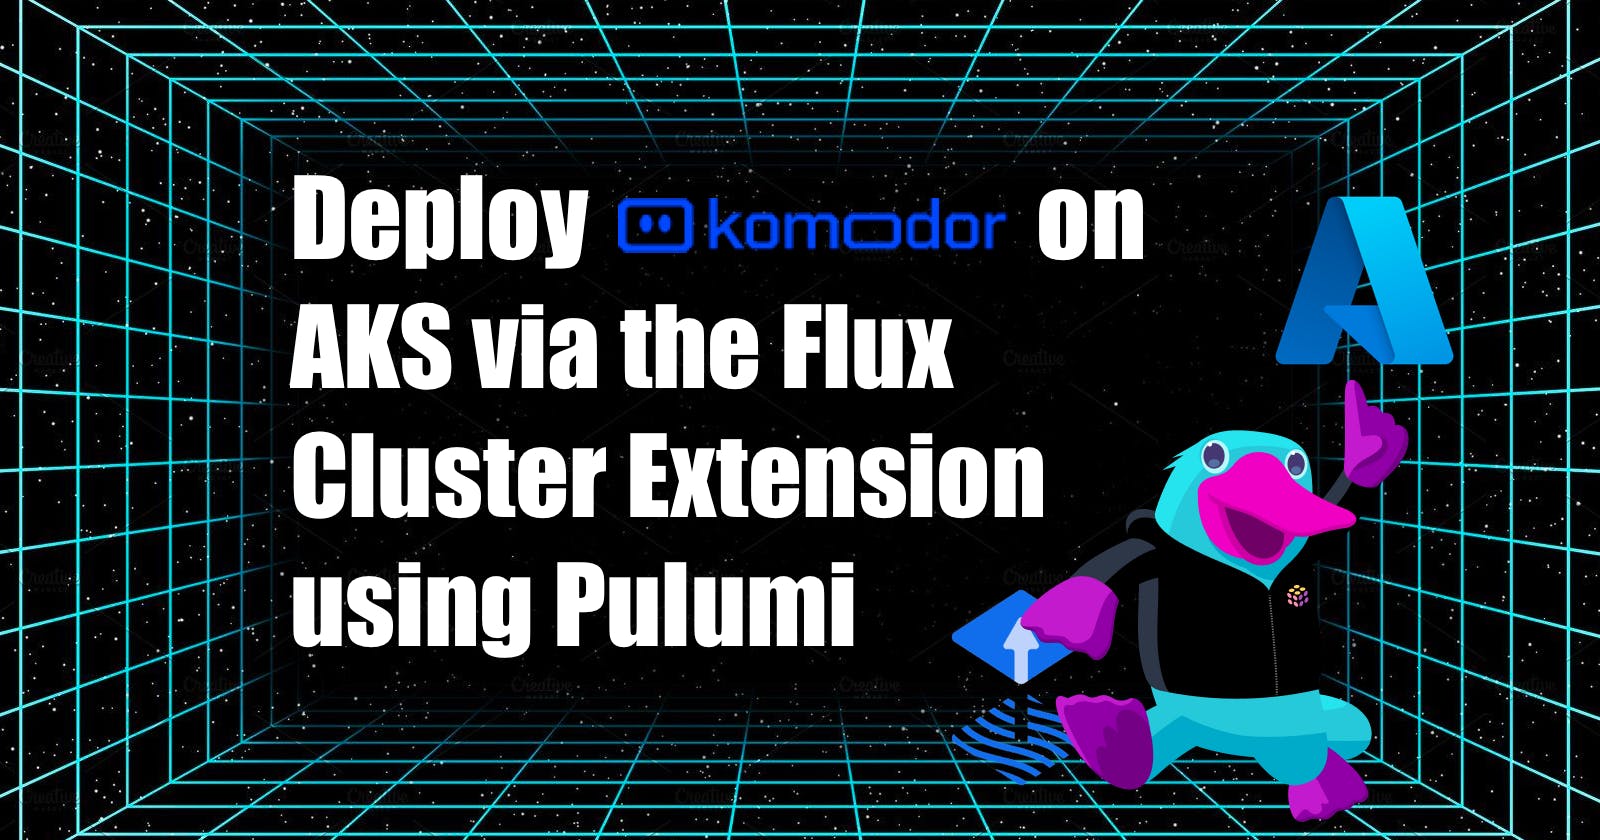 Deploy Komodor on AKS via the Flux Cluster Extension using Pulumi